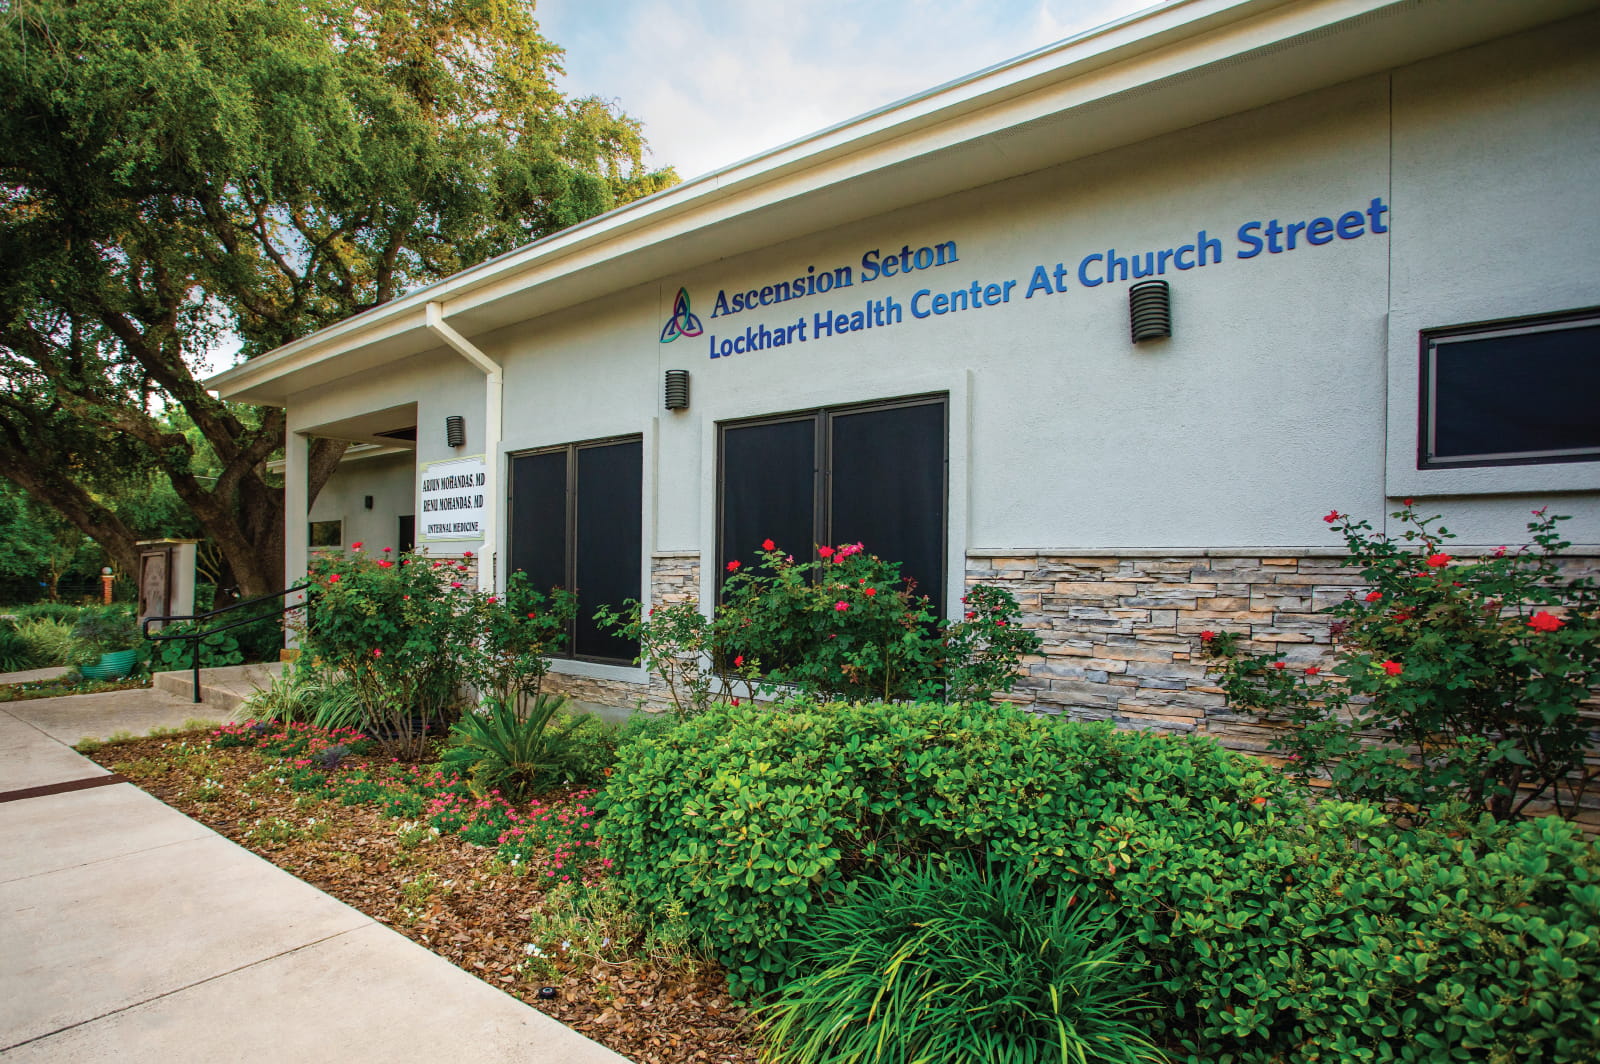 Ascension Seton Health Center Lockhart - Church